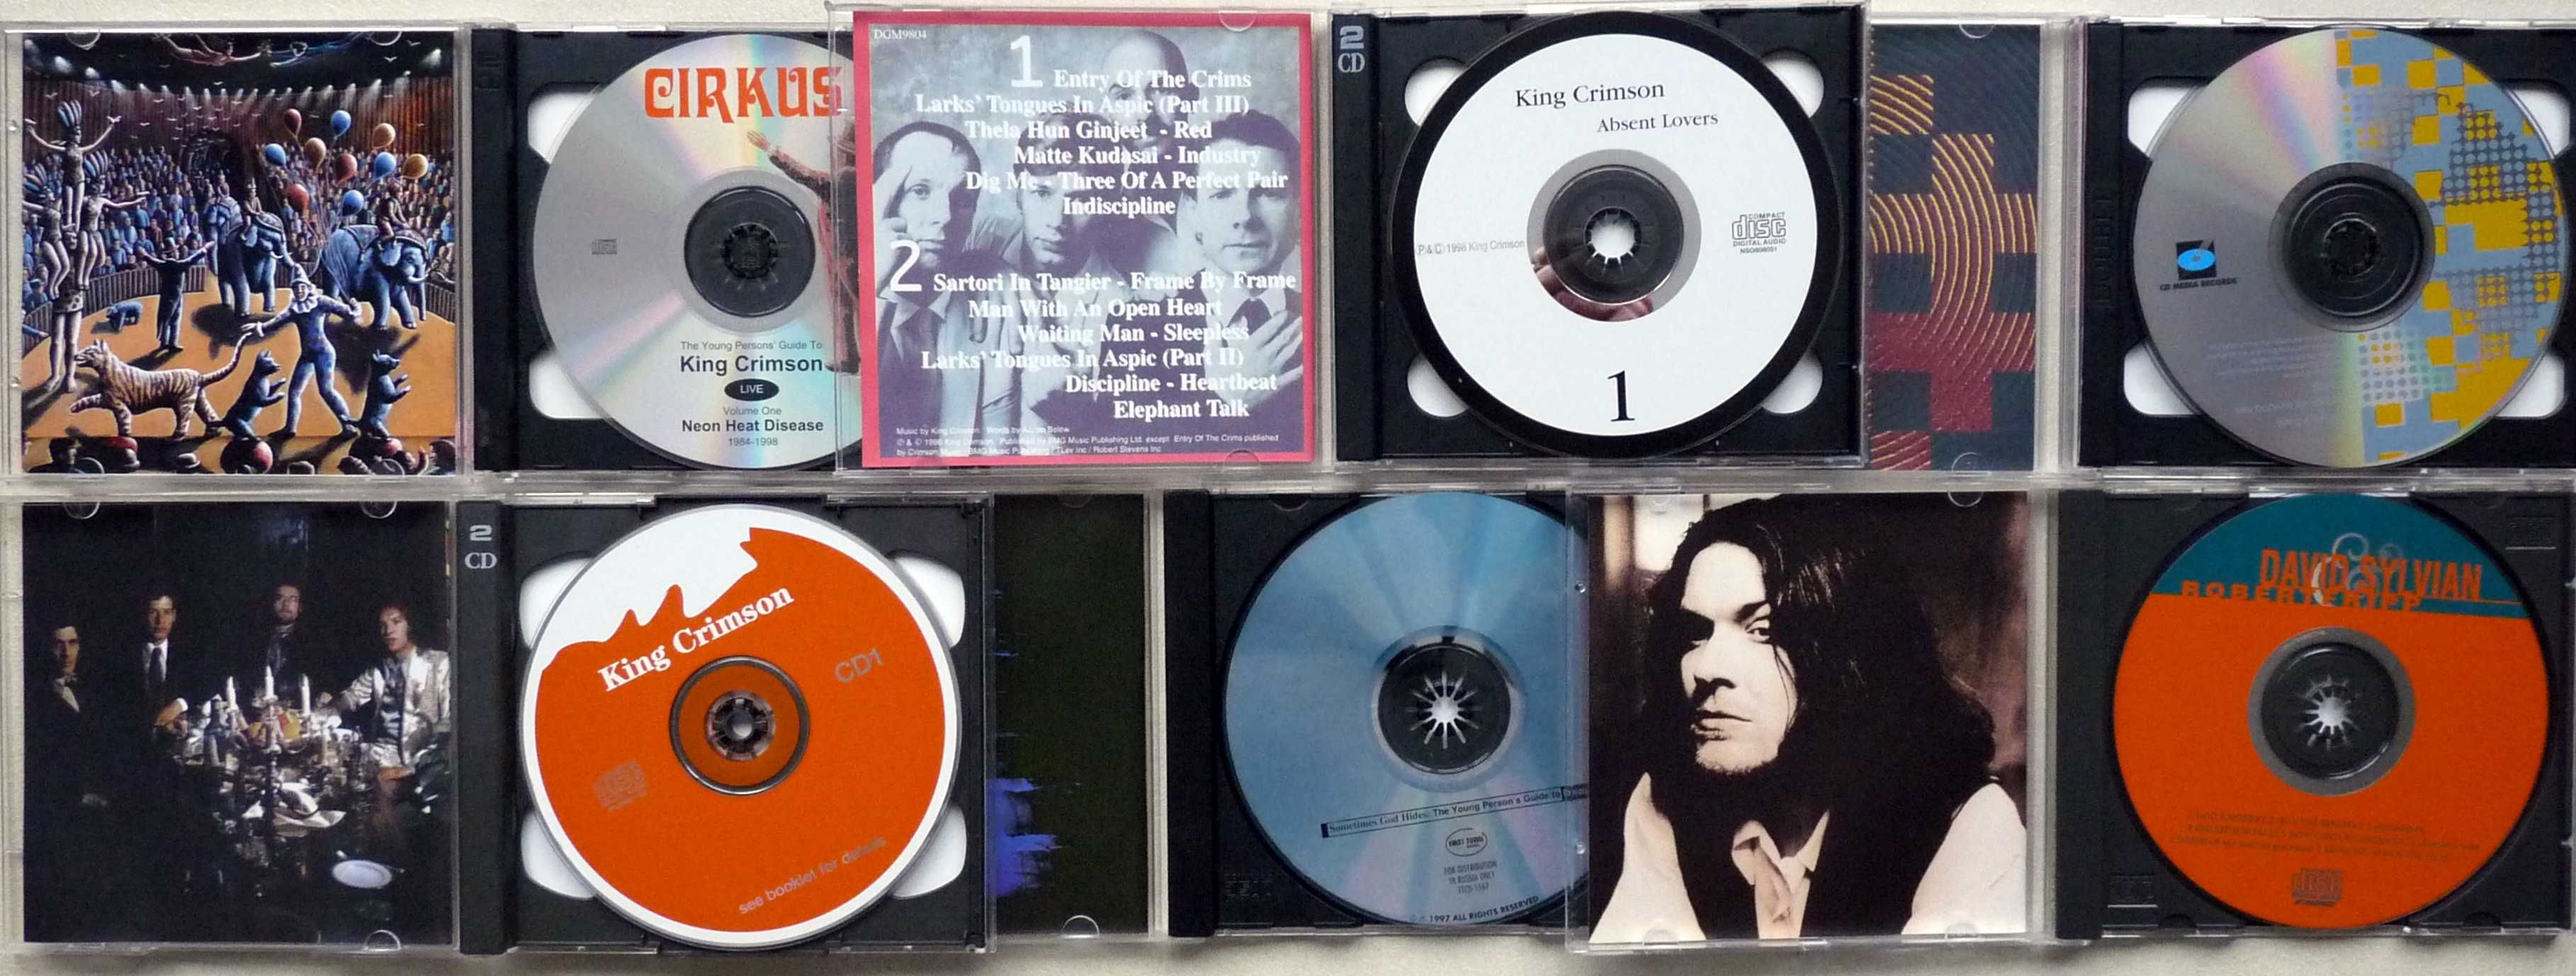 King Crimson на CD